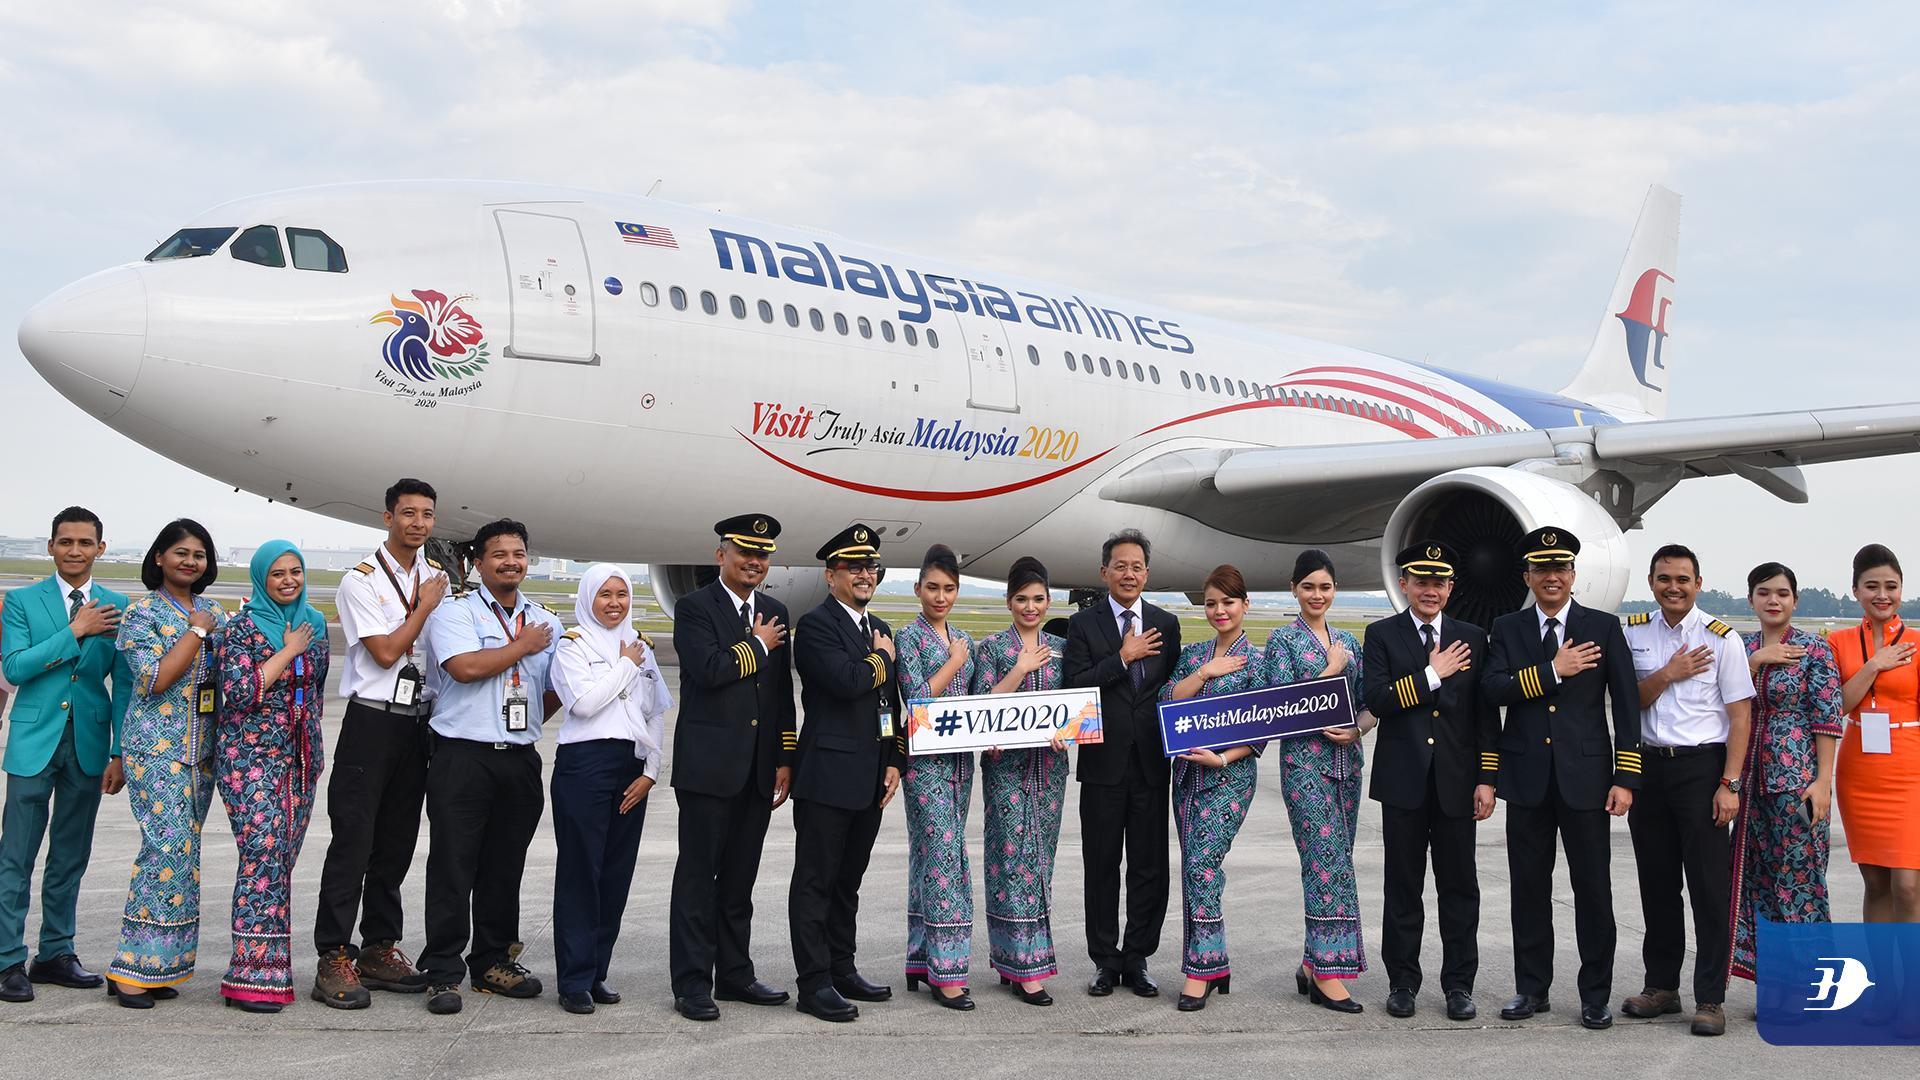 Малайзия эйрлайнс. Малайзия Эйр. Авиакомпания малазийские авиалинии. Авиакомпания в Малайзии Малайзия Эйрлайнс. Malaysia Airlines лого.